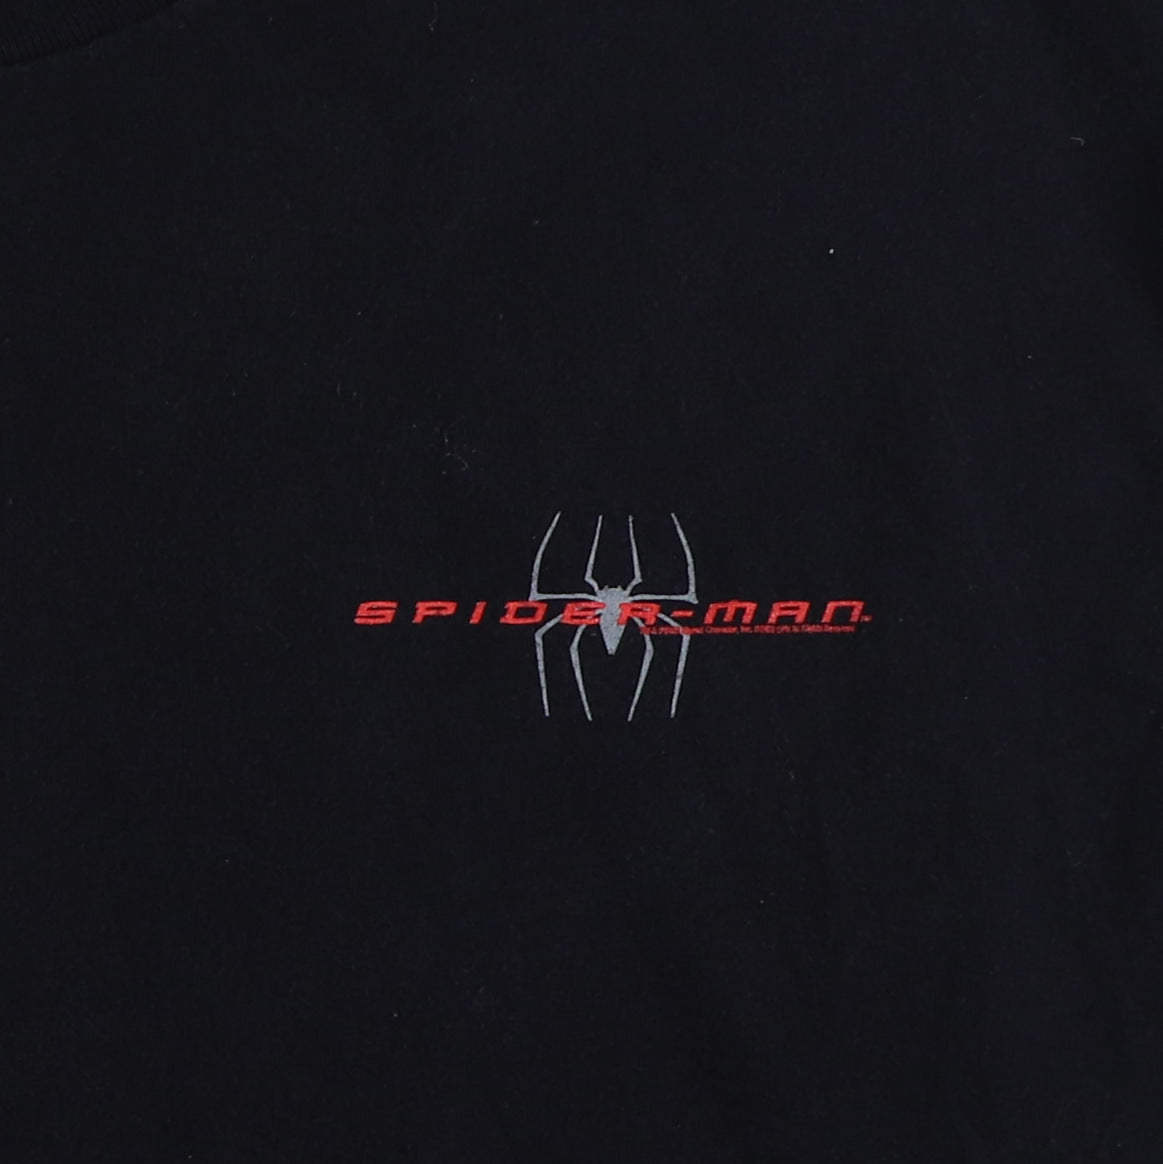 2002 Spider-Man Marvel Comics Movie Promo Shirt